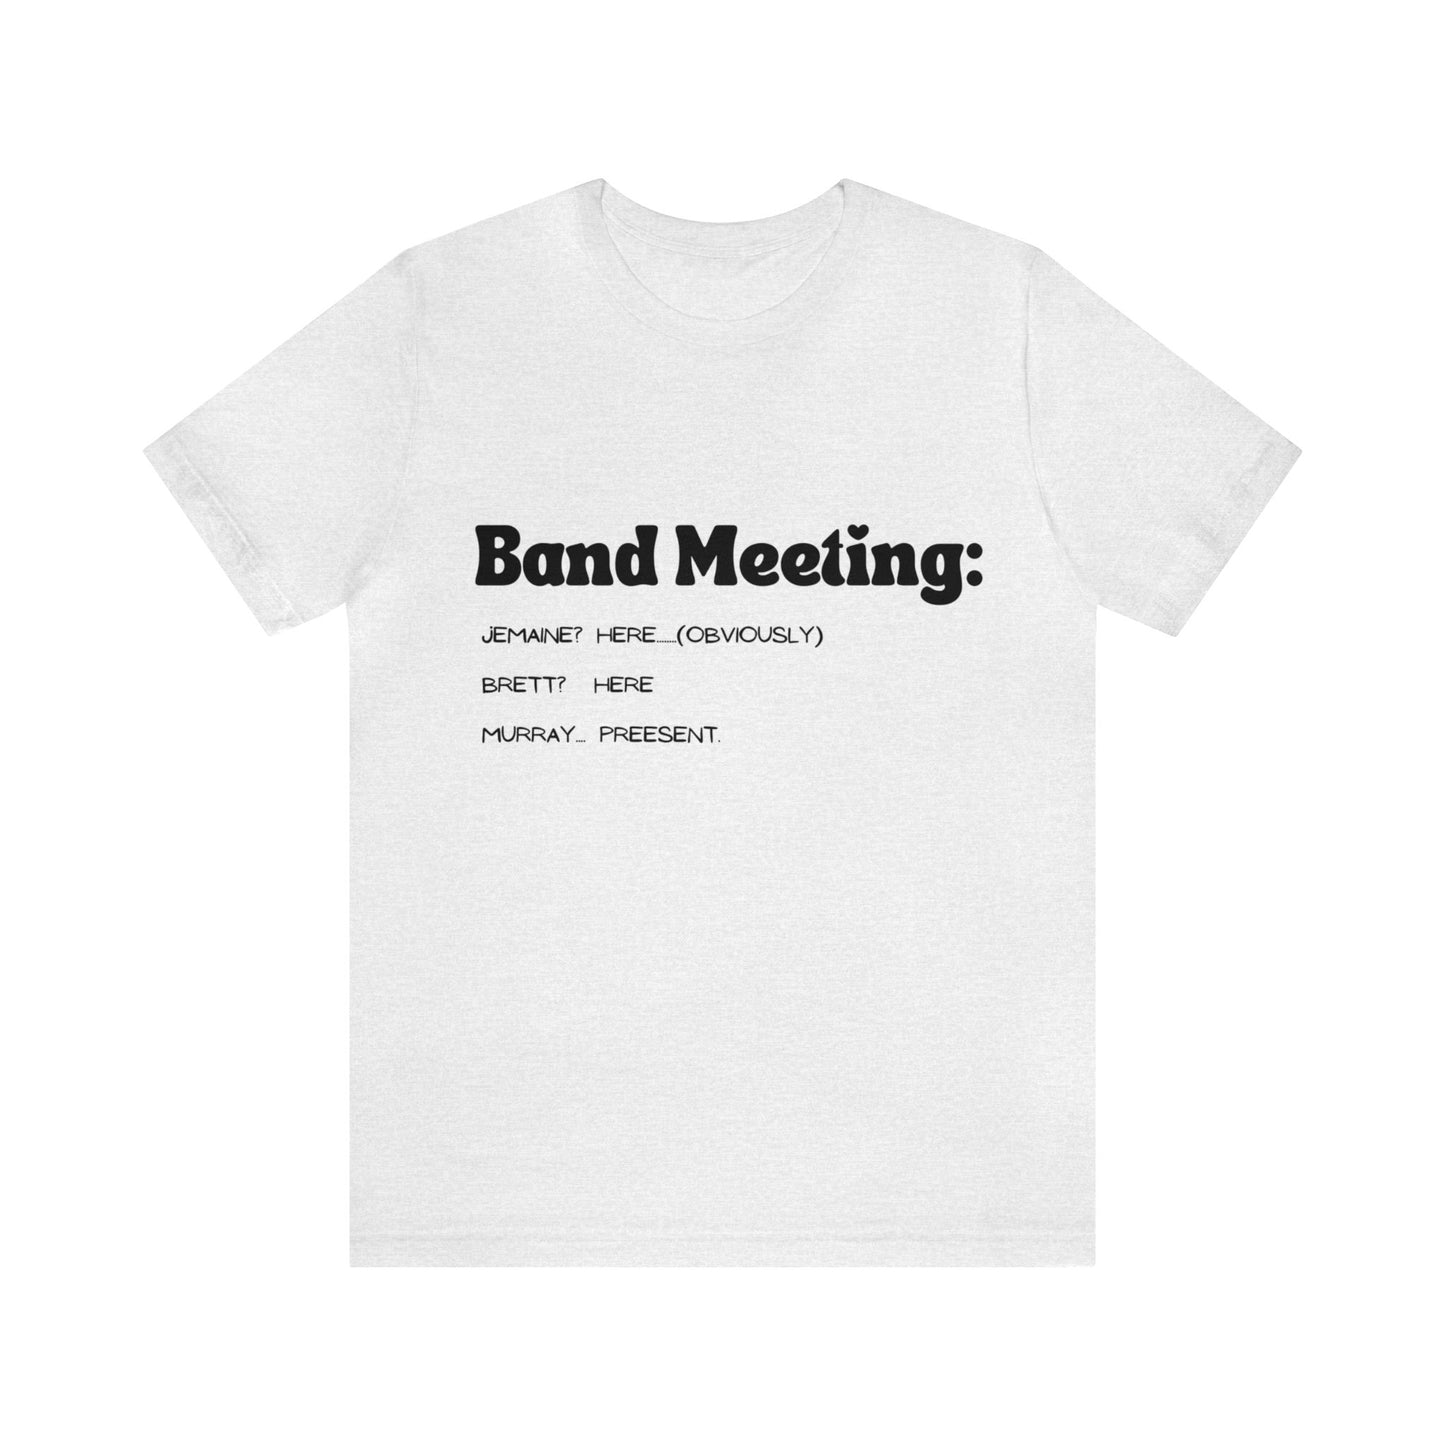 Flight of the Conchords meeting tee, FOTC fan gift, Band meeting t-shirt